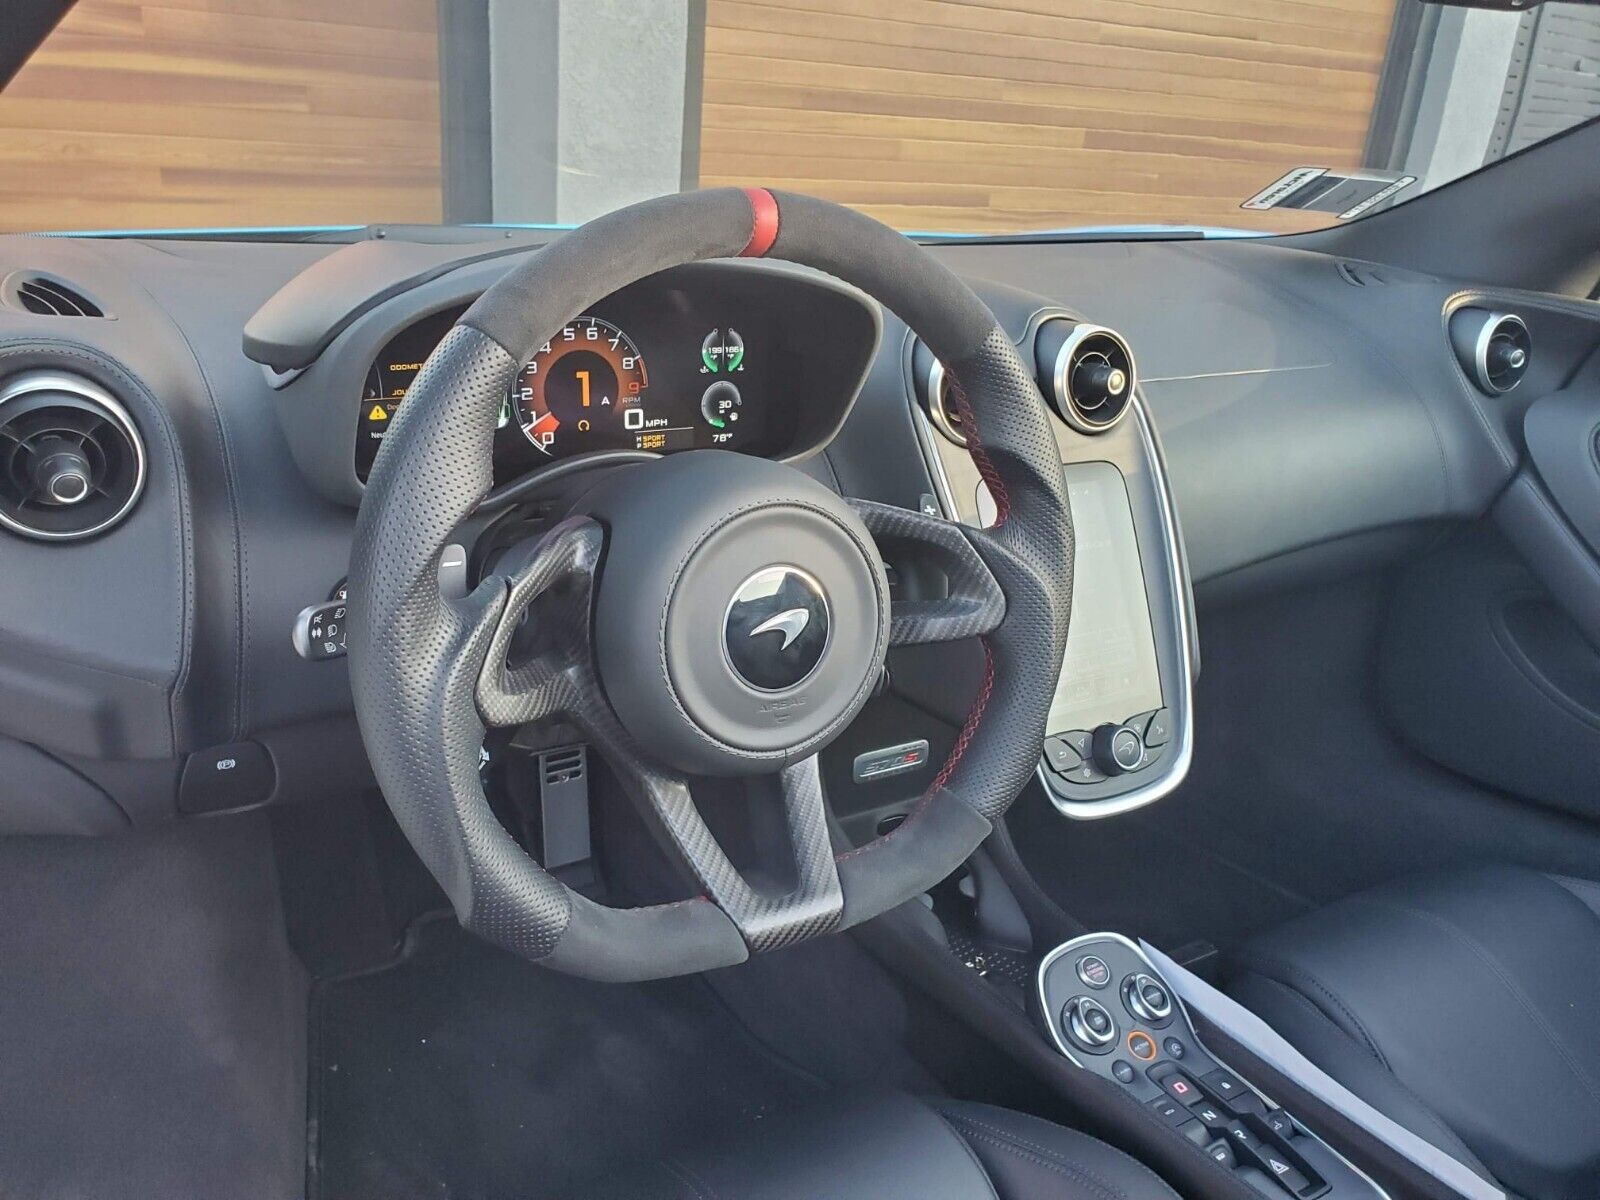 Used McLaren MP4-12C 650S 570S Leather Steering Wheel with Carbon Fiber Trim 